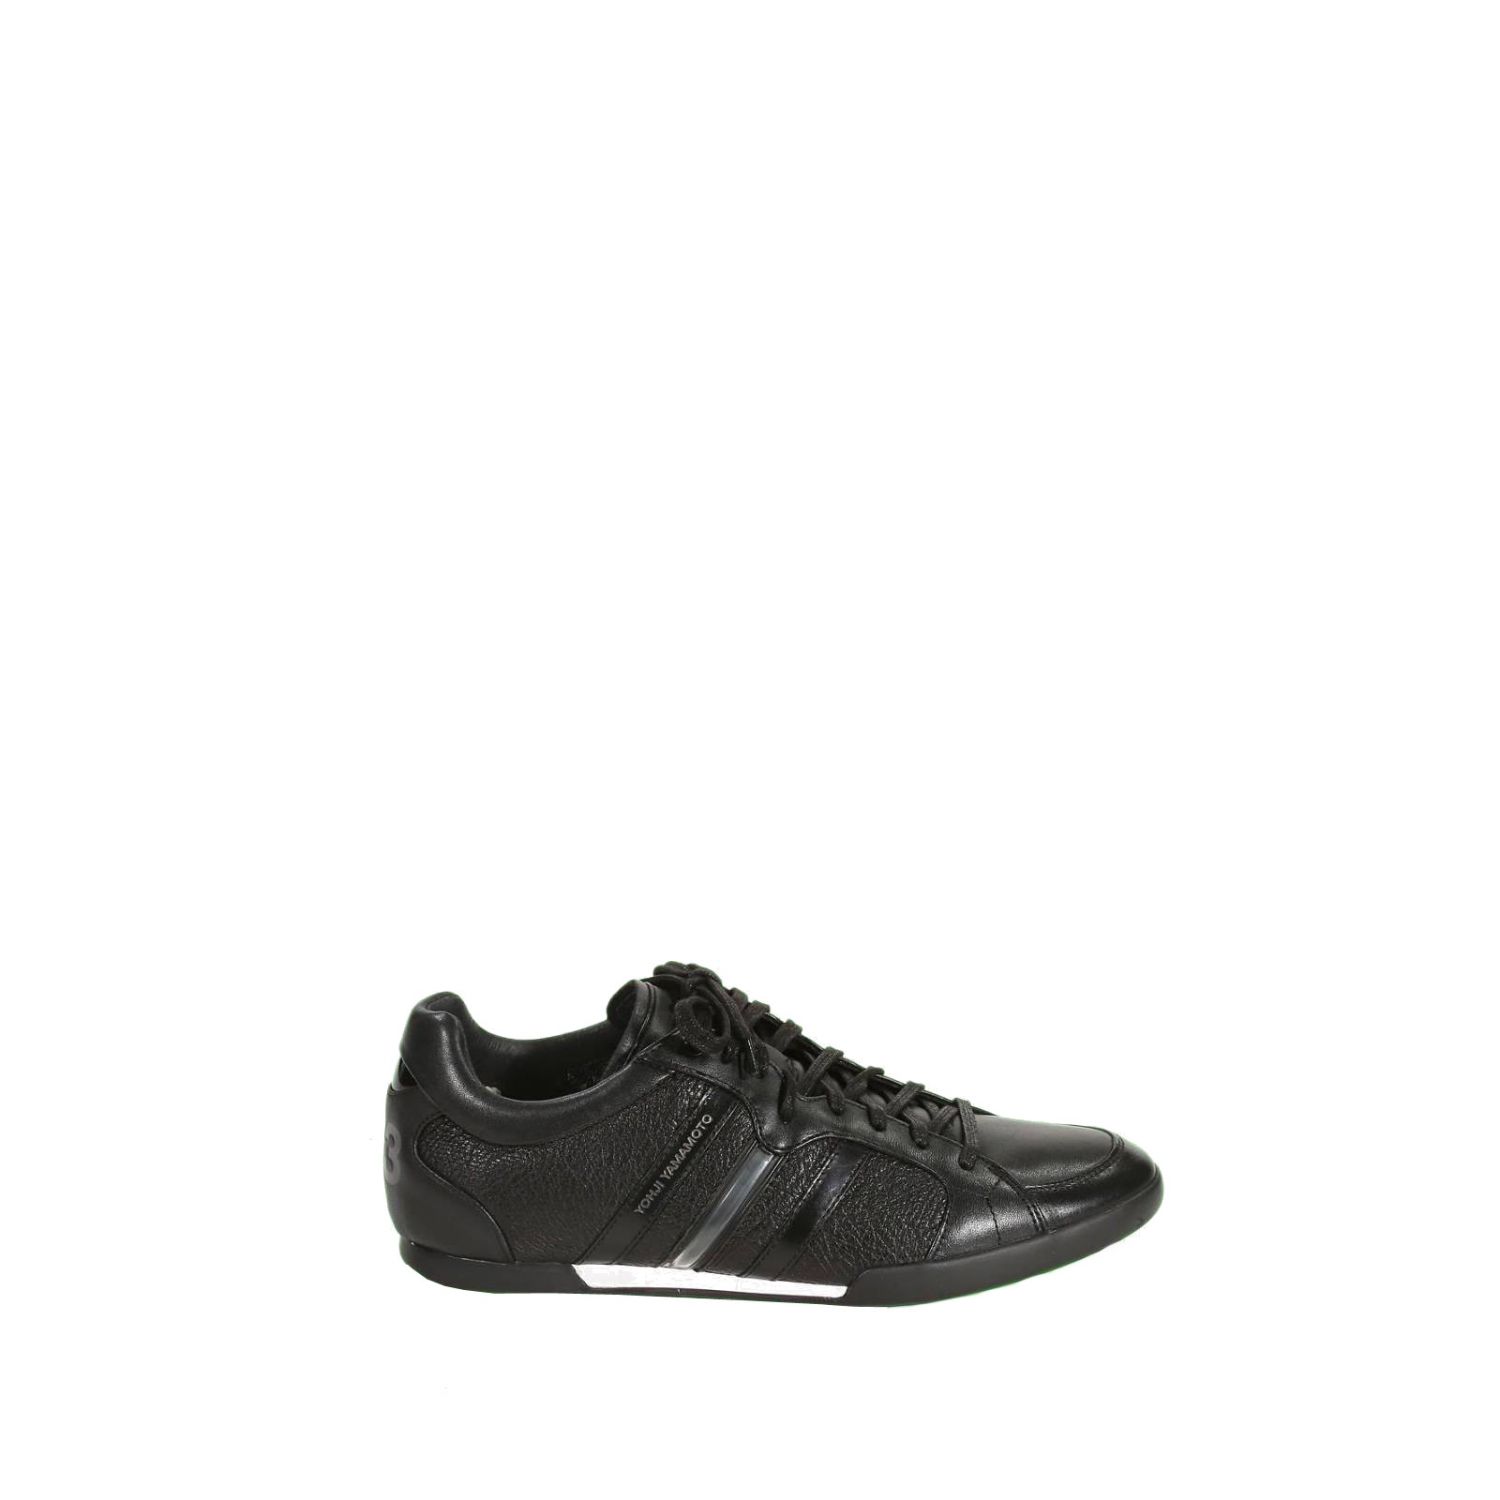 Y3 Yohji Yamamoto Shoes Sala Leather in Black for Men